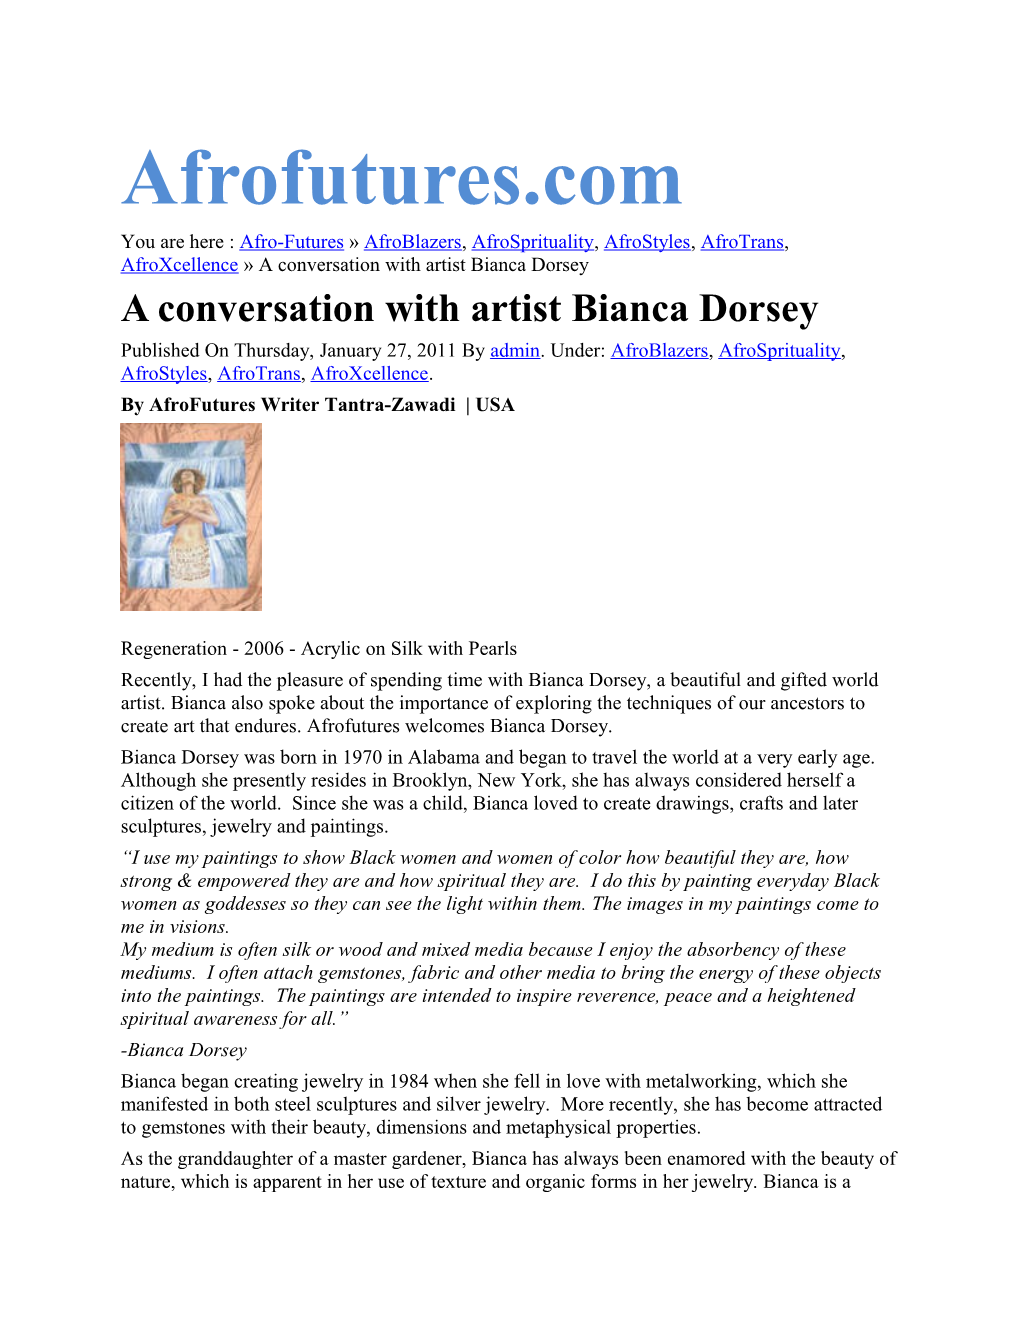 A Conversation with Artist Bianca Dorsey